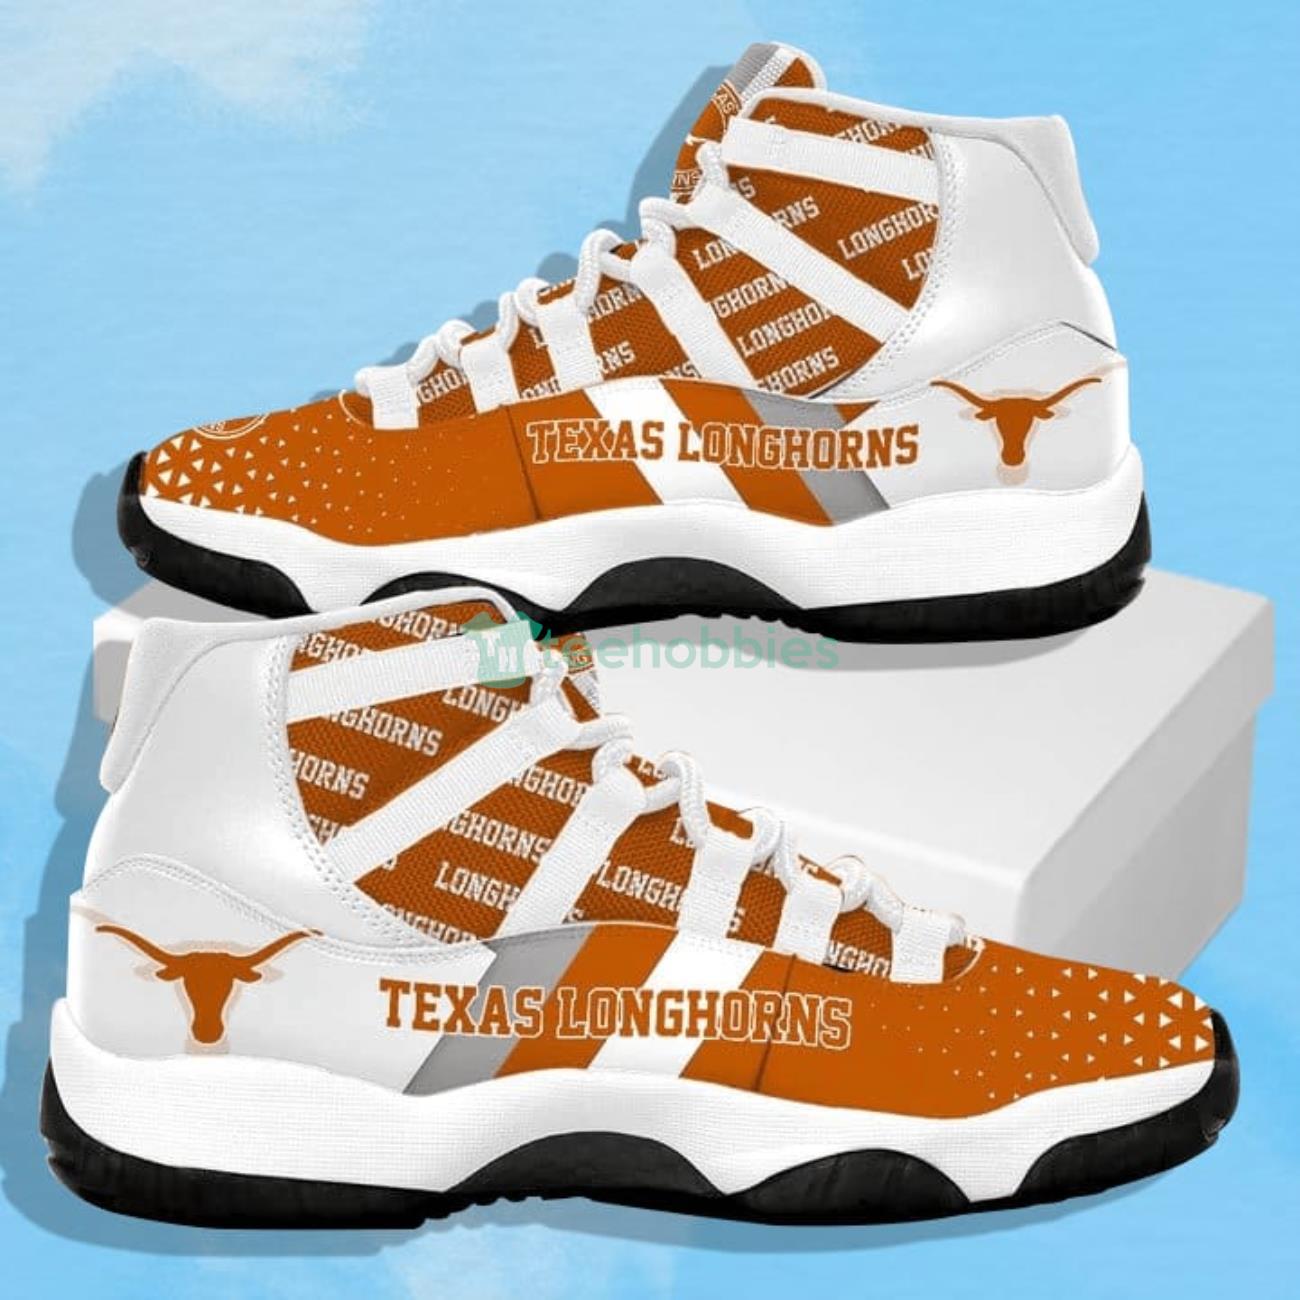 Texas Longhorns Impressive Design Air Jordan 11 Shoes Product Photo 2